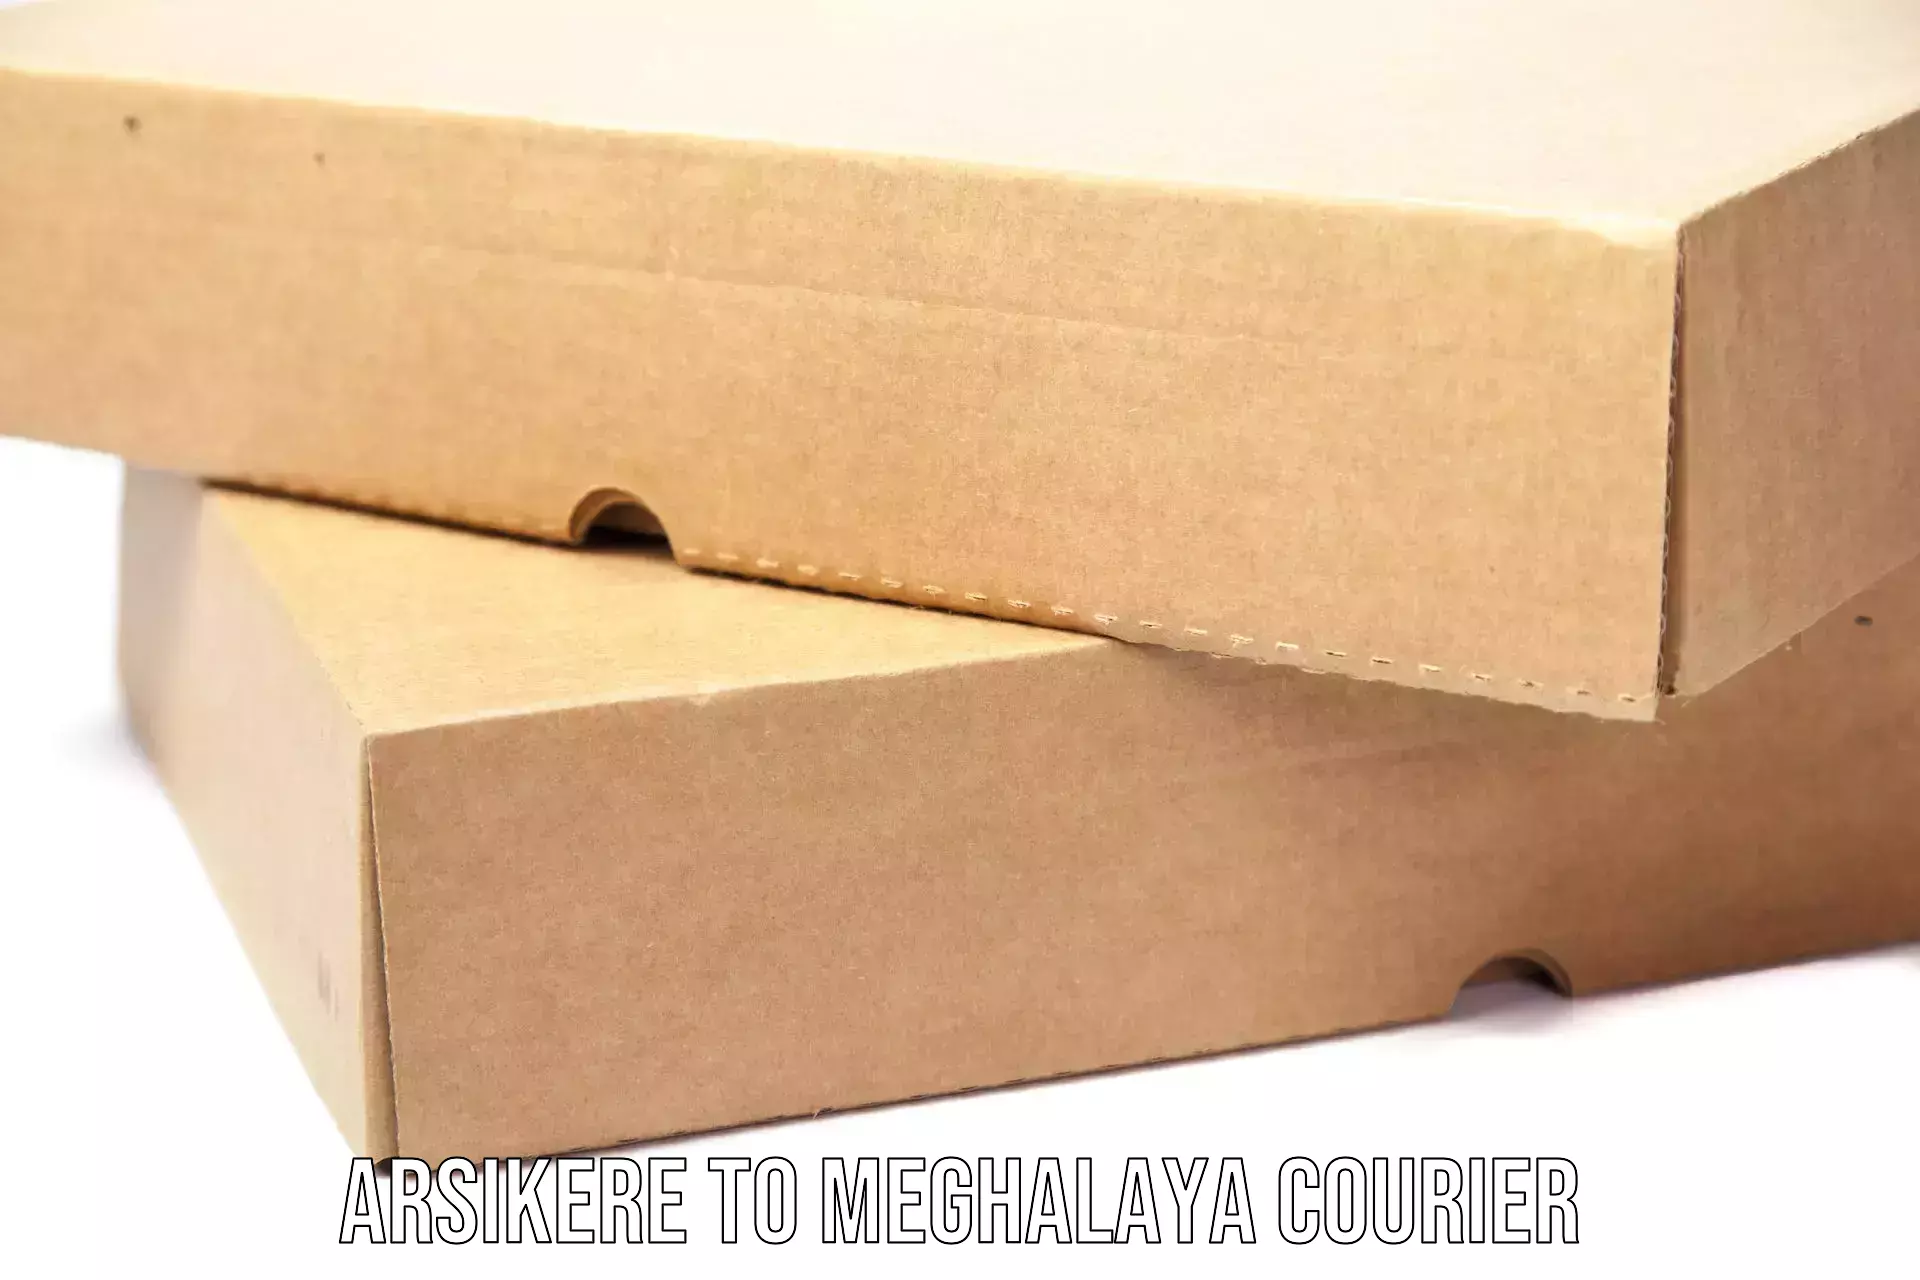 Digital courier platforms Arsikere to Meghalaya